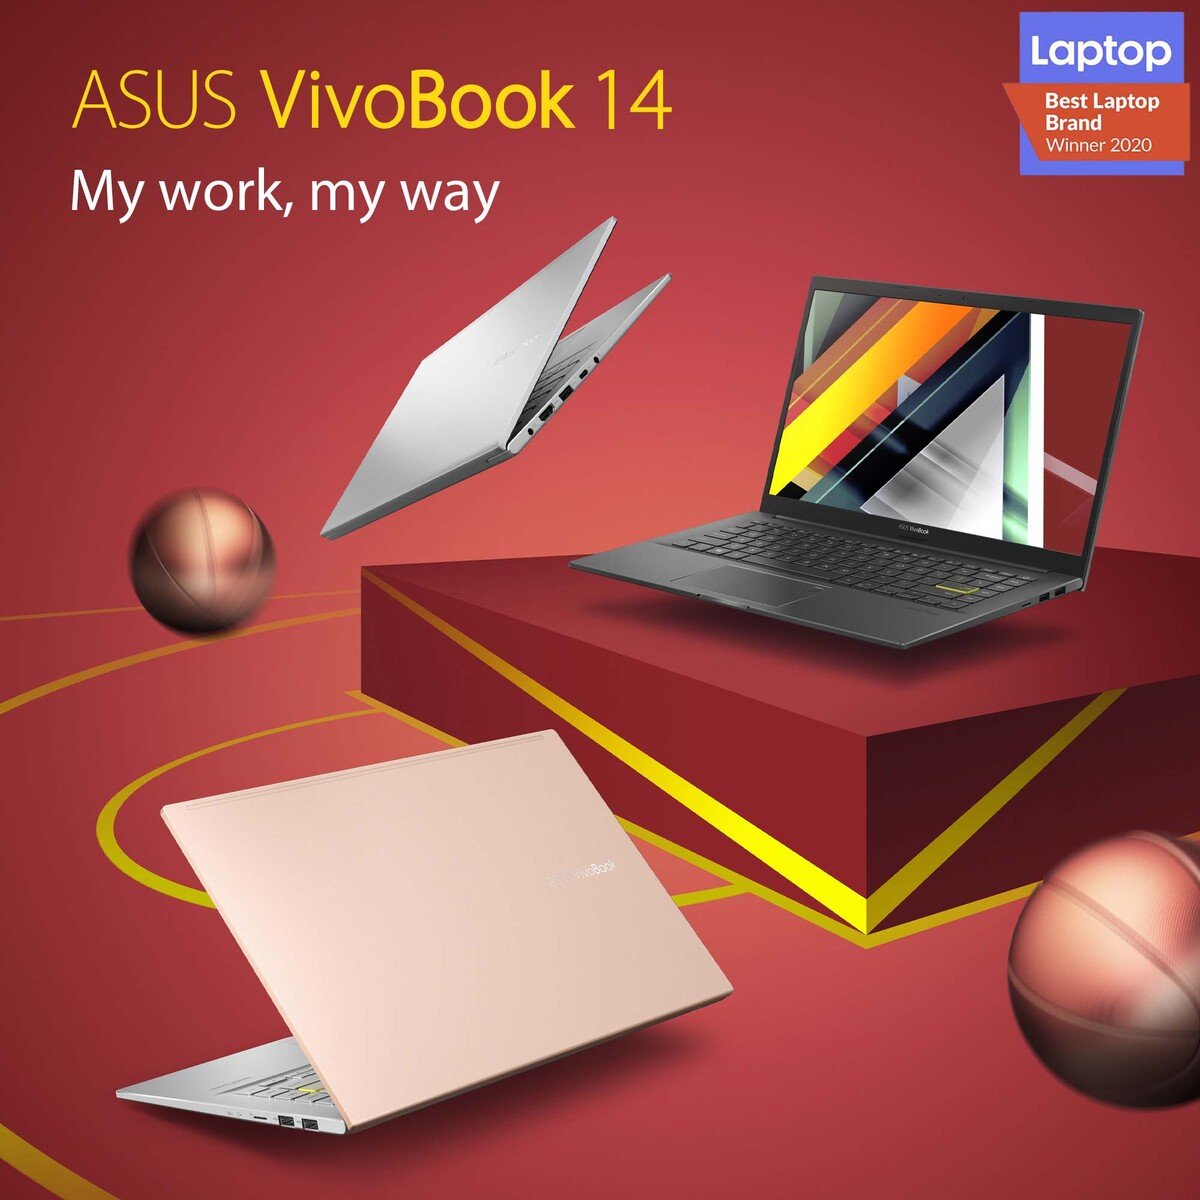 Asus Vivobook S M413ua Eb043t Slim Laptop Ryzen 5 5500u 8gb Ram